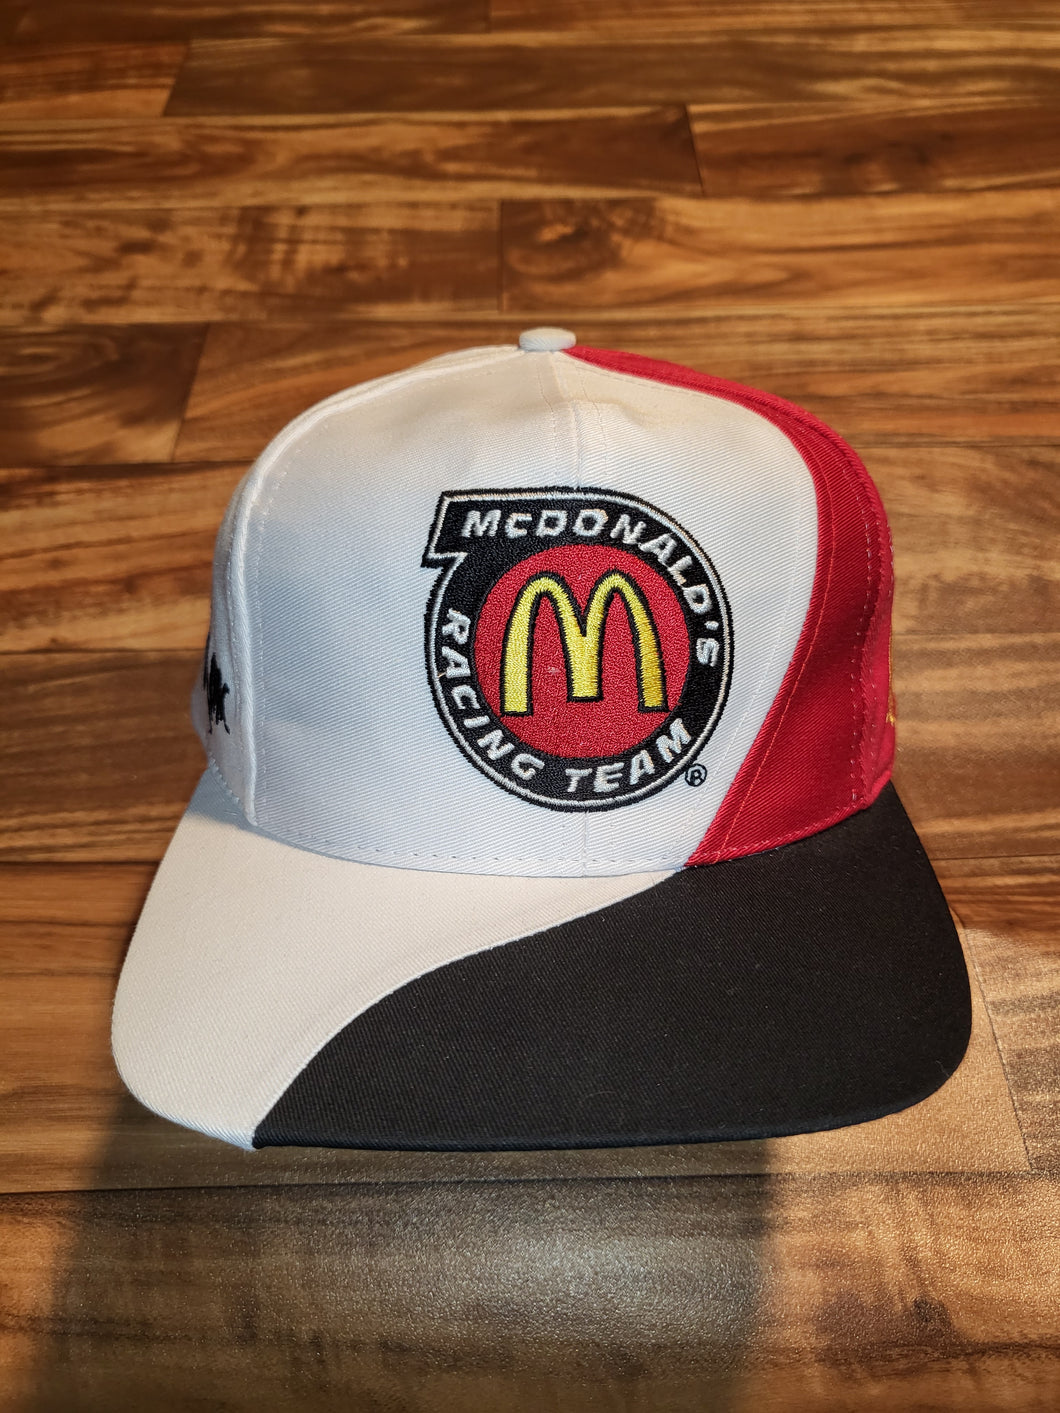 Vintage Rare McDonald's Racing Cory Mac Nascar Hat